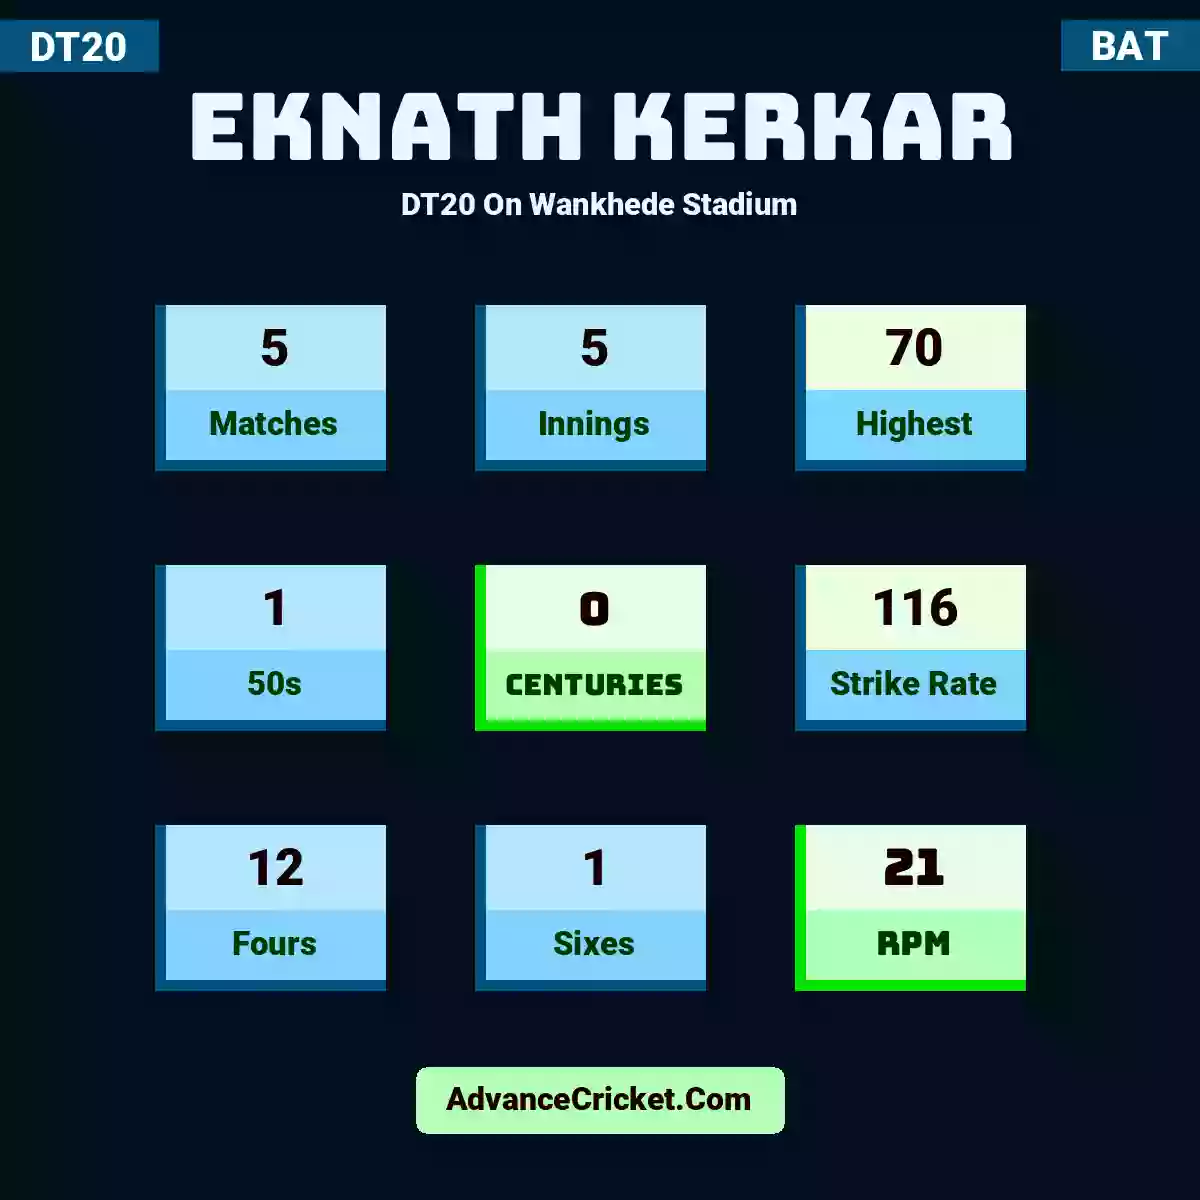 Eknath Kerkar DT20  On Wankhede Stadium, Eknath Kerkar played 5 matches, scored 70 runs as highest, 1 half-centuries, and 0 centuries, with a strike rate of 116. E.Kerkar hit 12 fours and 1 sixes, with an RPM of 21.